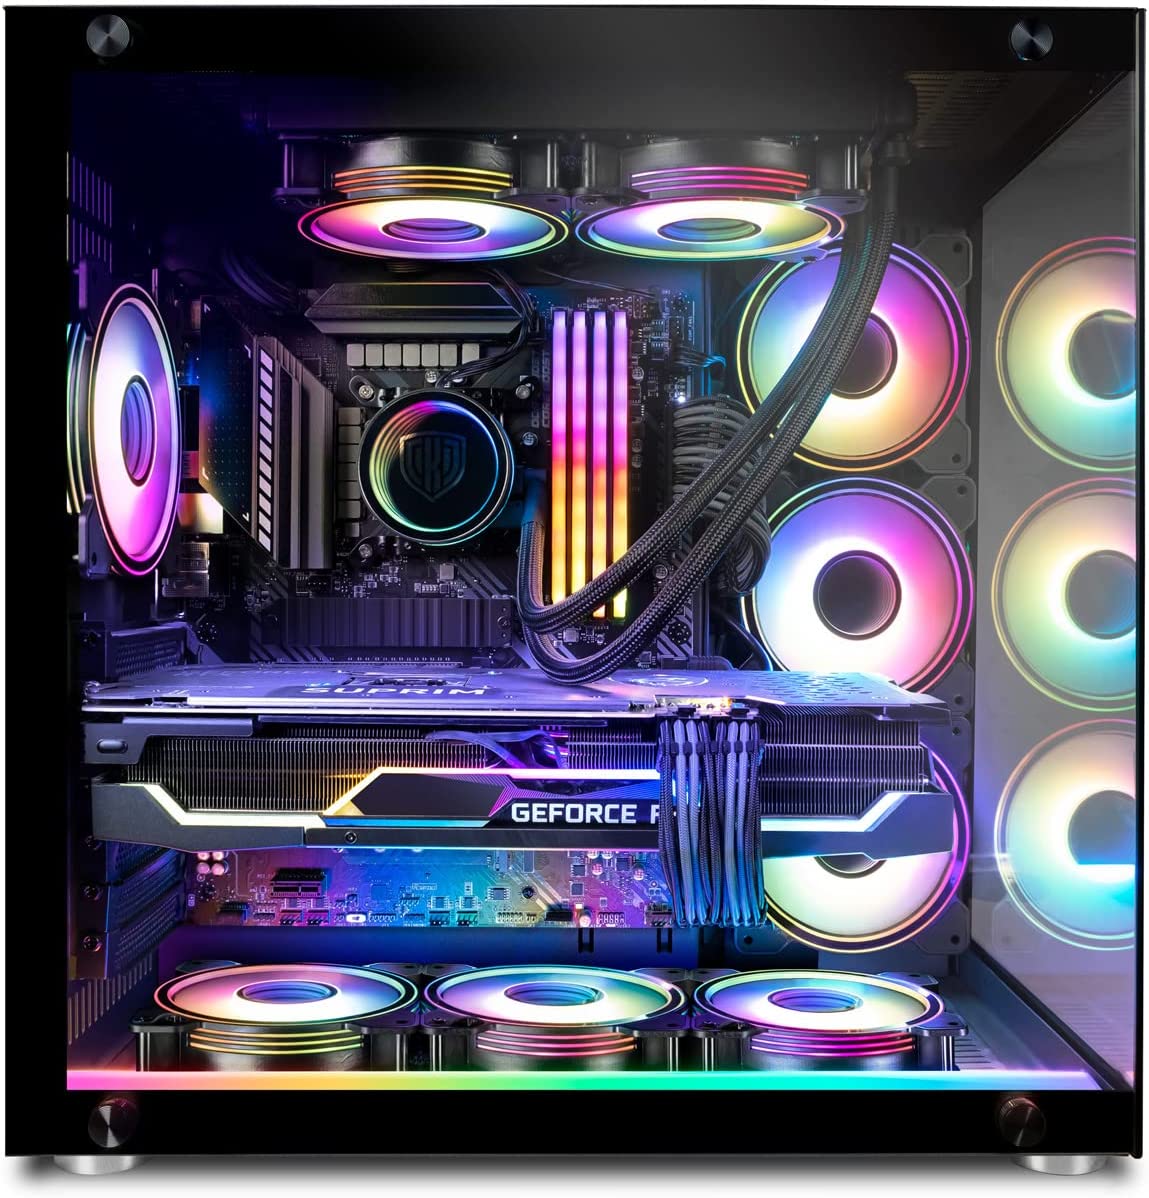 Dream Machine September 2022 Complete by voltronad - Intel Core i9-12900K,  GeForce RTX 3090 Ti, Lian Li PC-O11 Dynamic ATX Full Tower - PCPartPicker